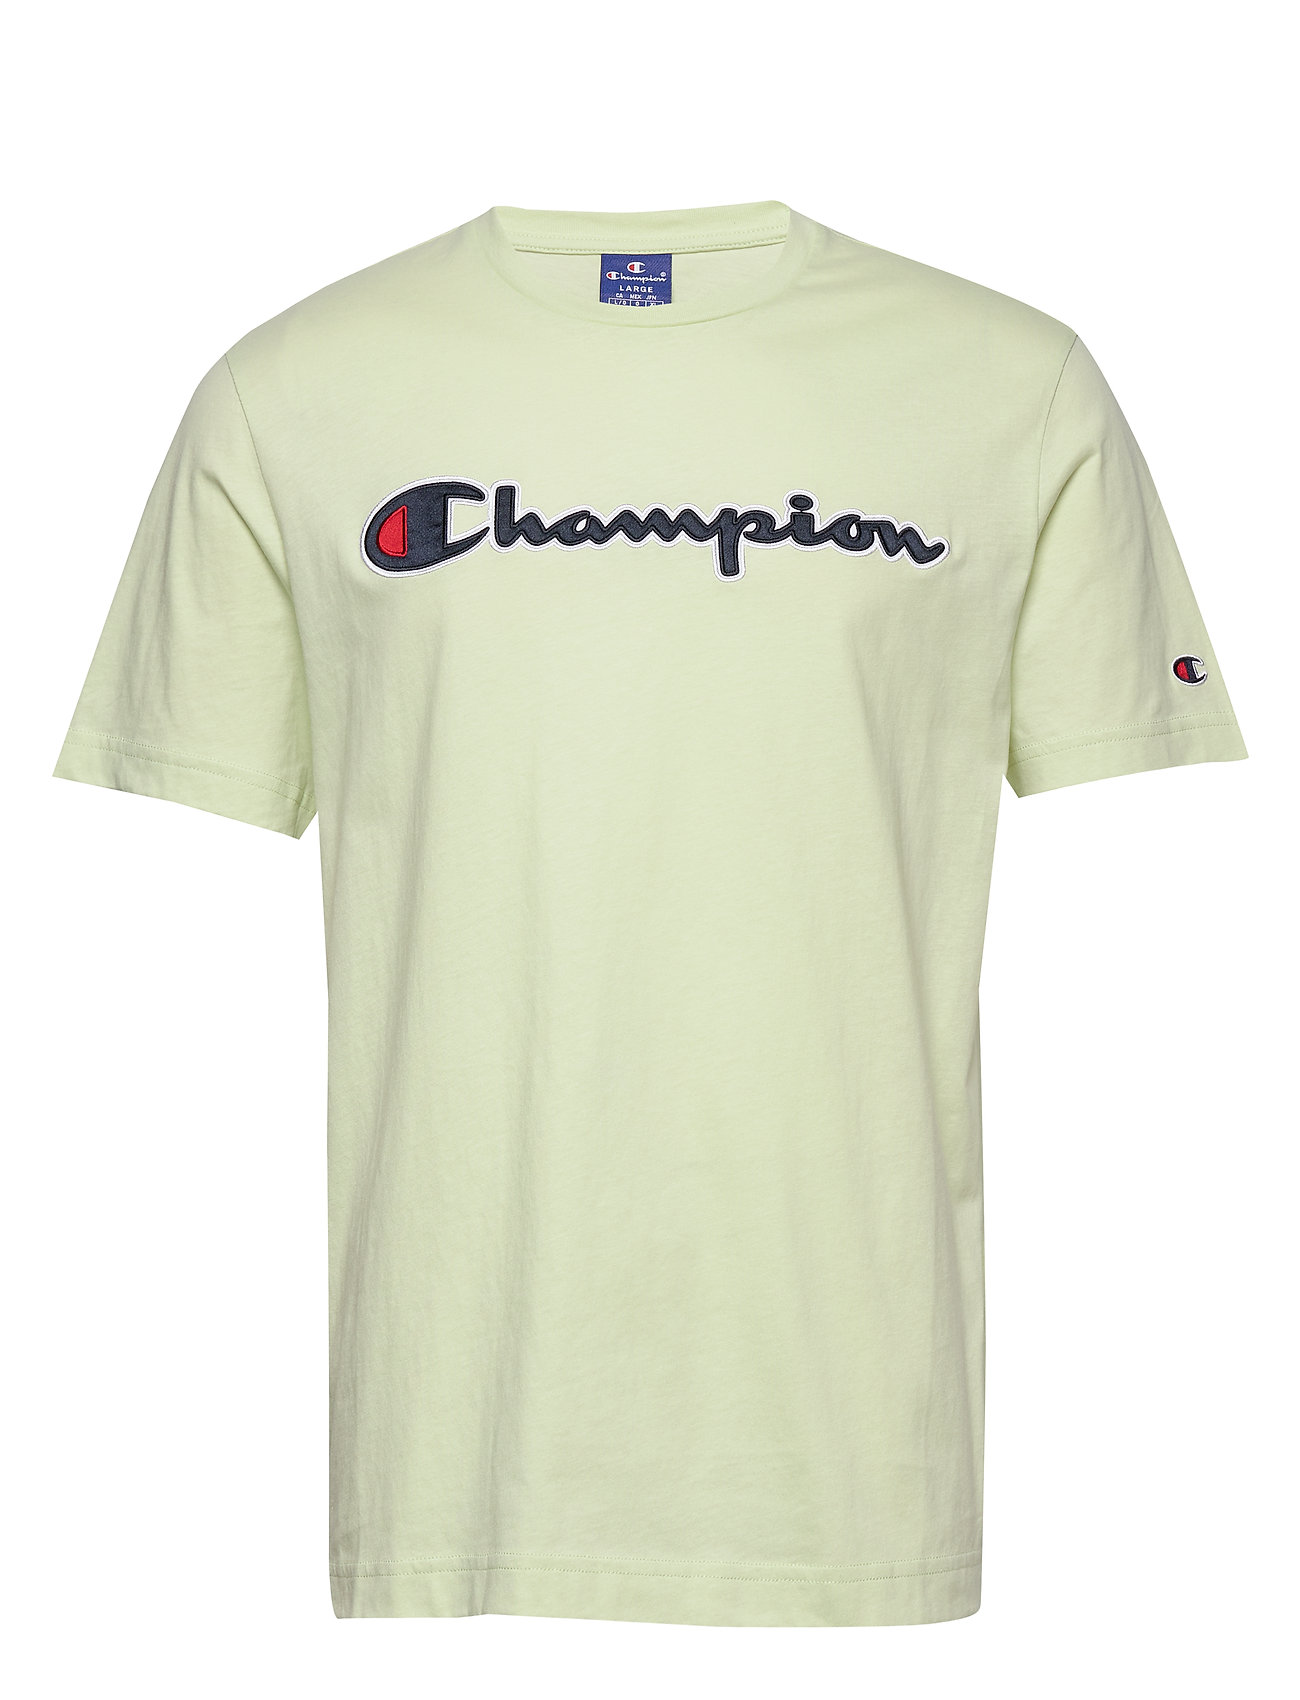 Sort Crewneck T-Shirt T-shirt Gul Champion kortærmede - Pashion.dk